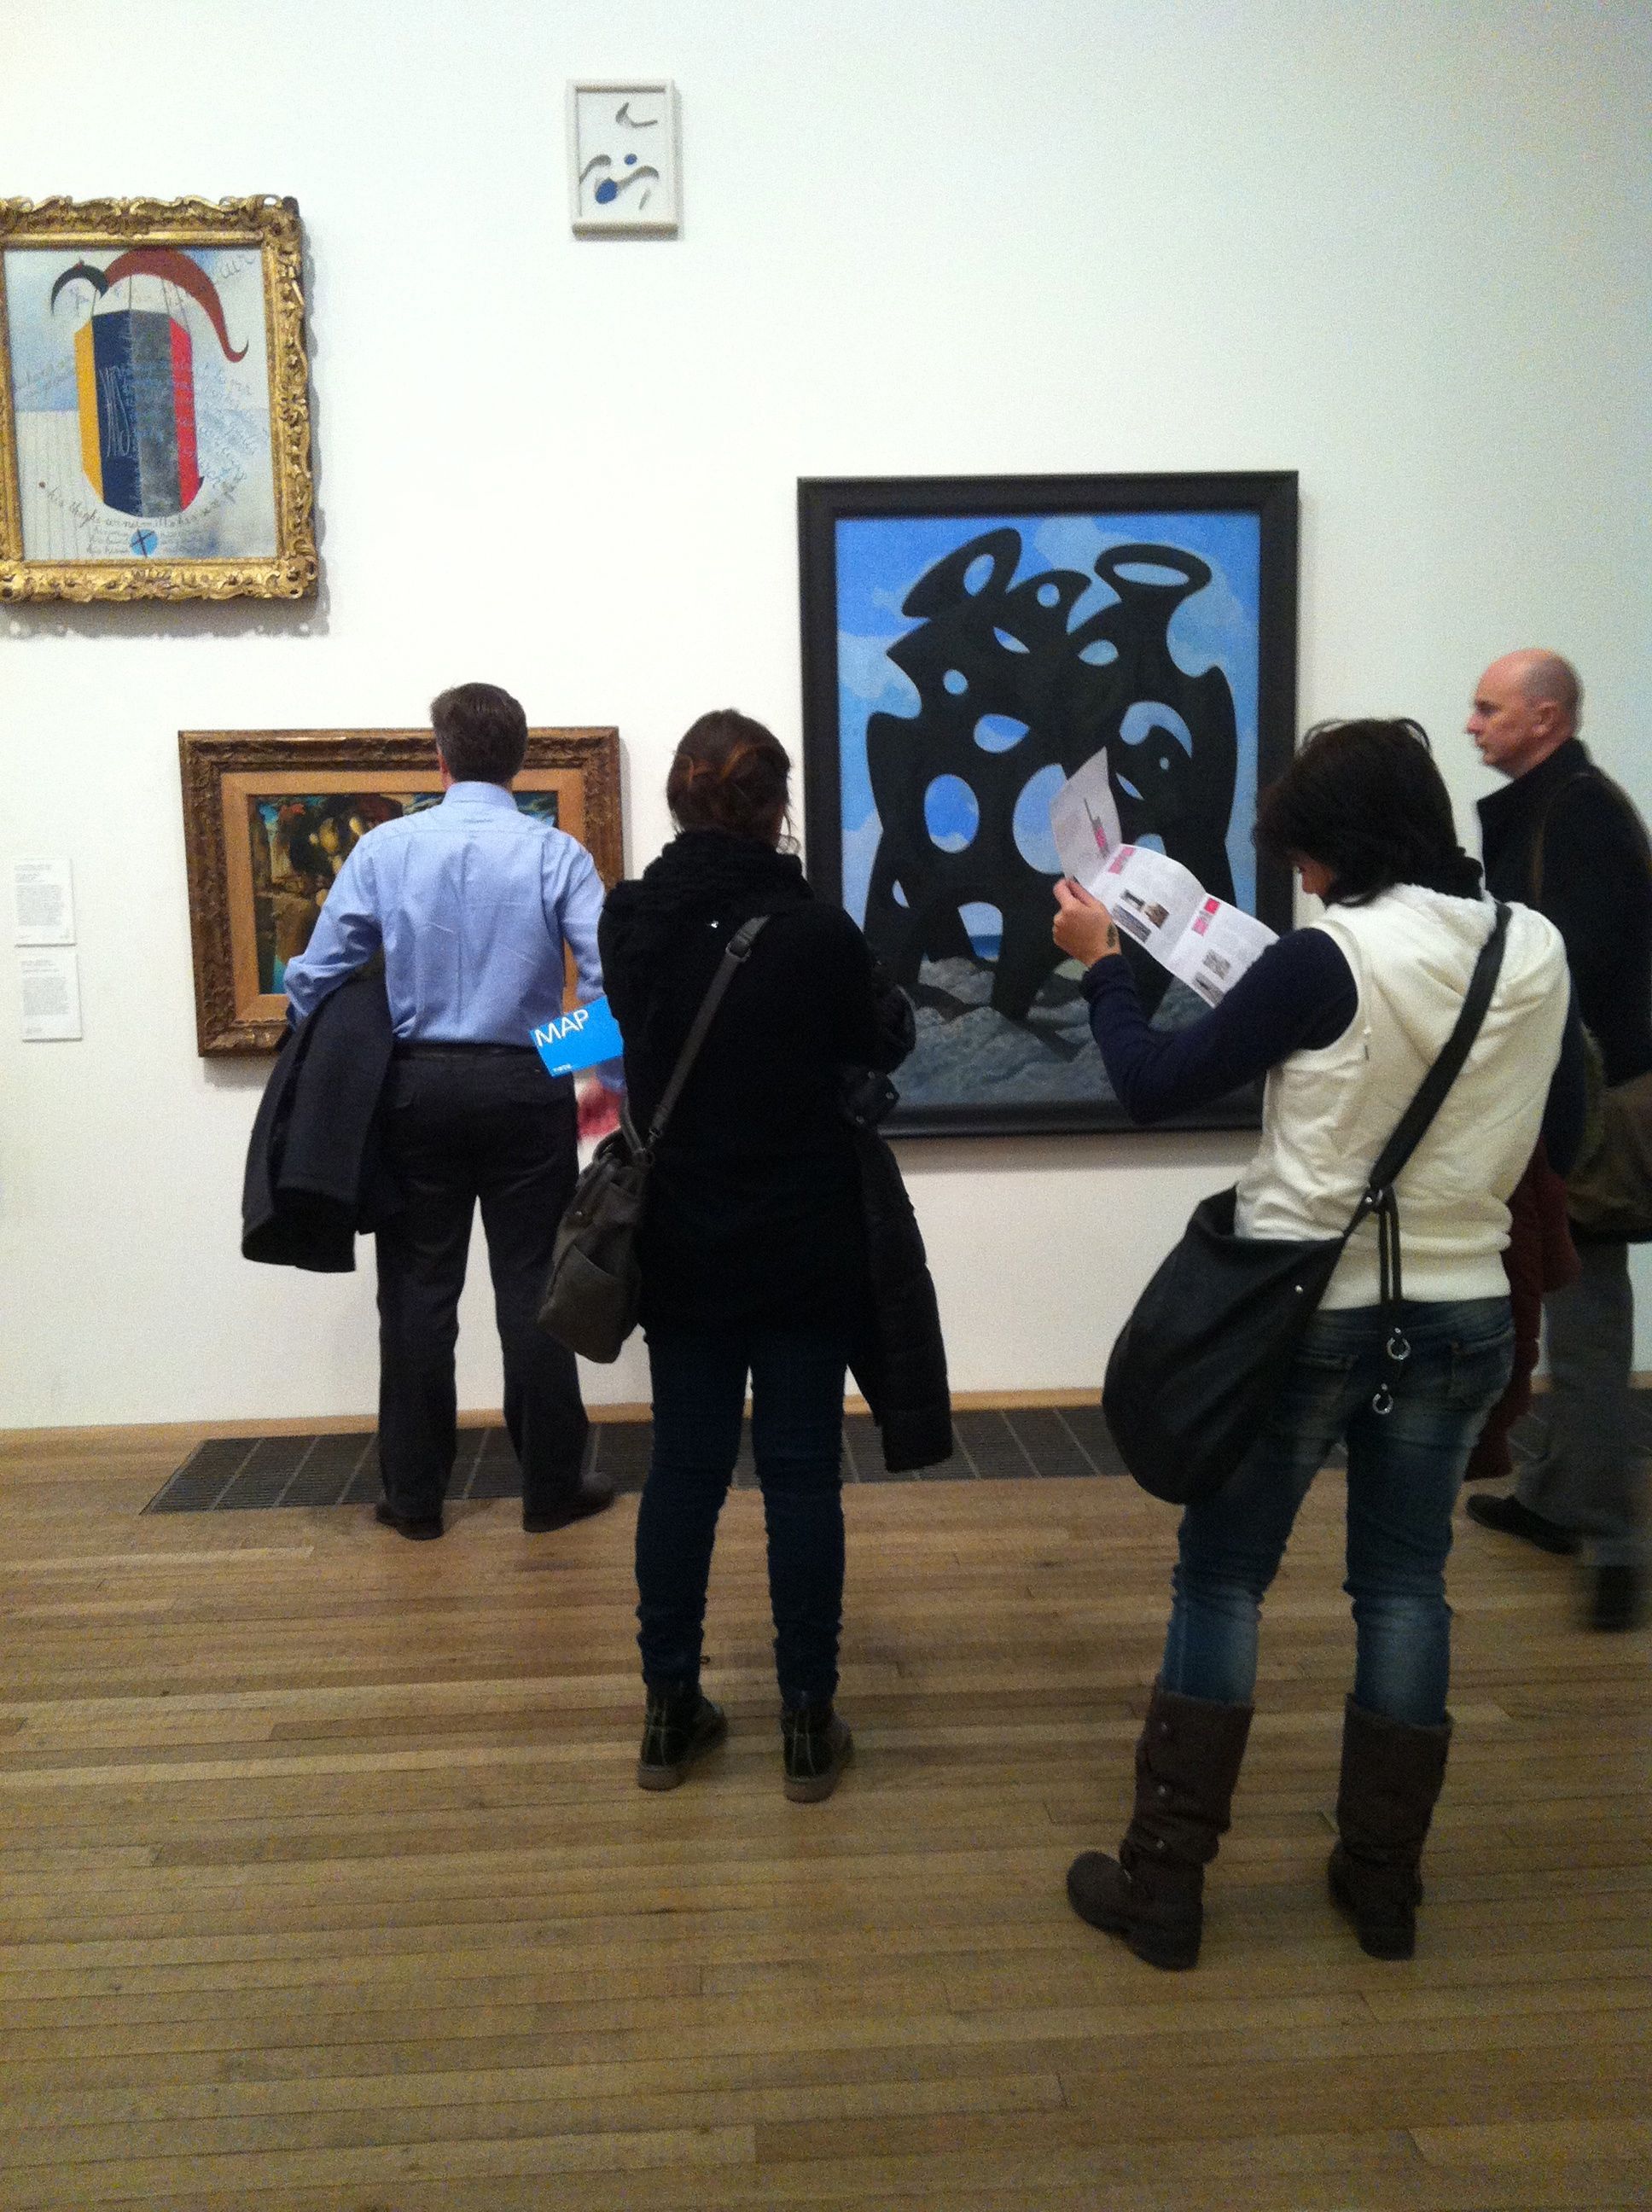 Tate Modern 28.11.13